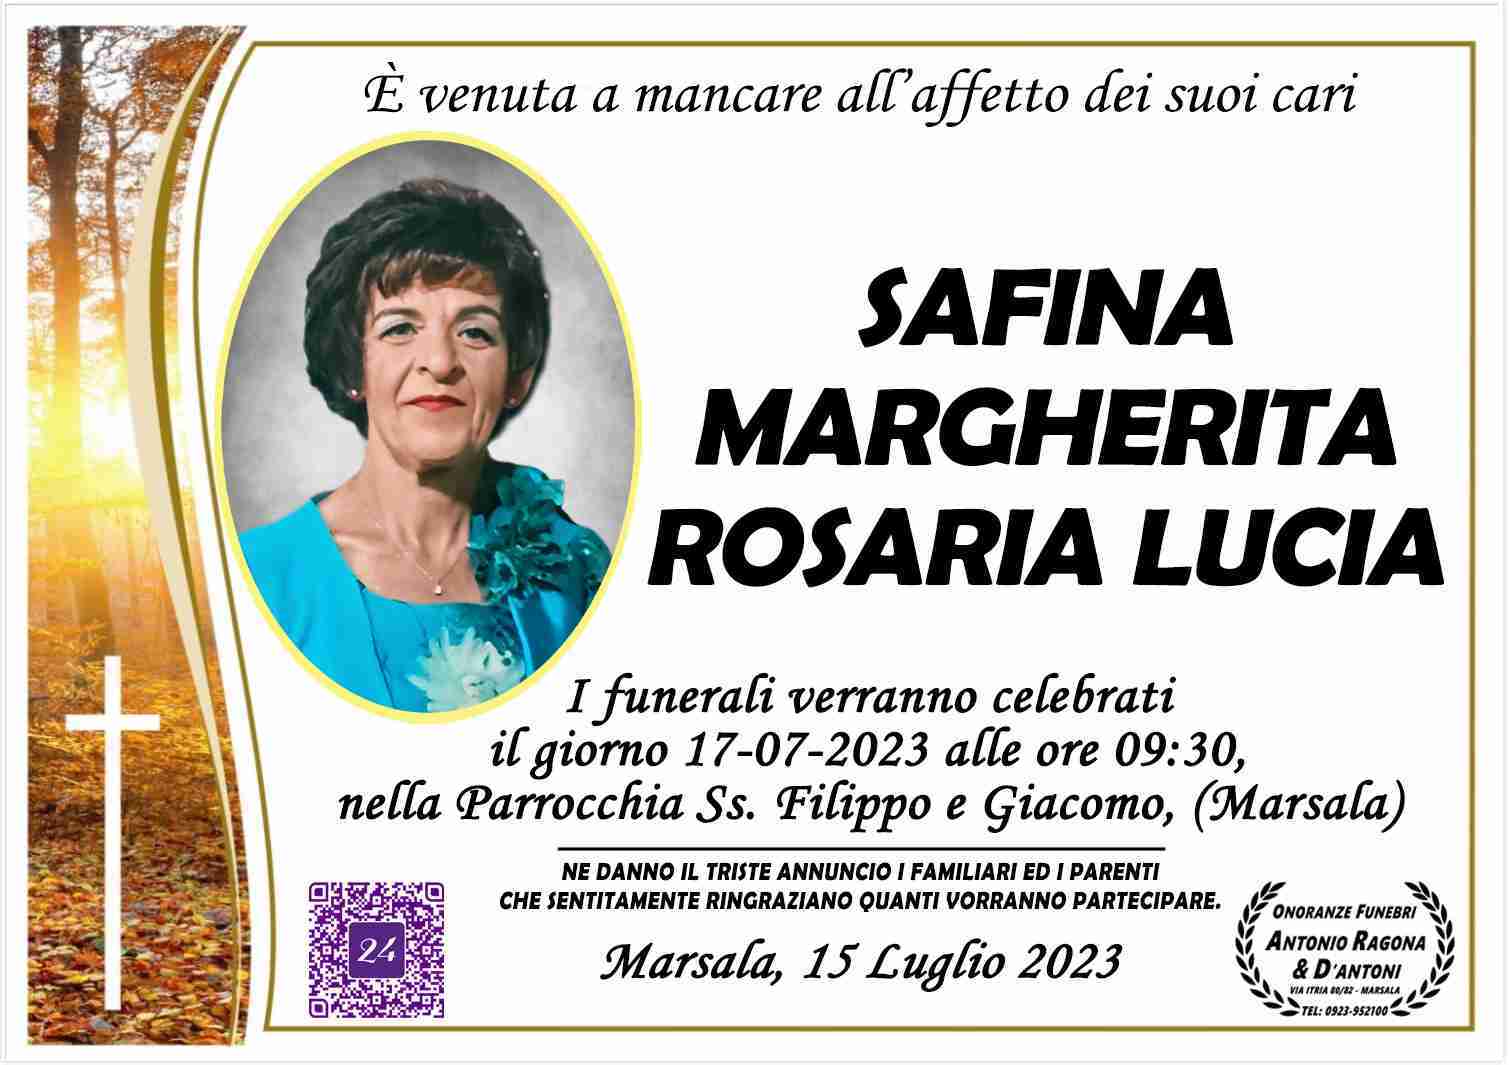 Margherita Rosaria Lucia Safina